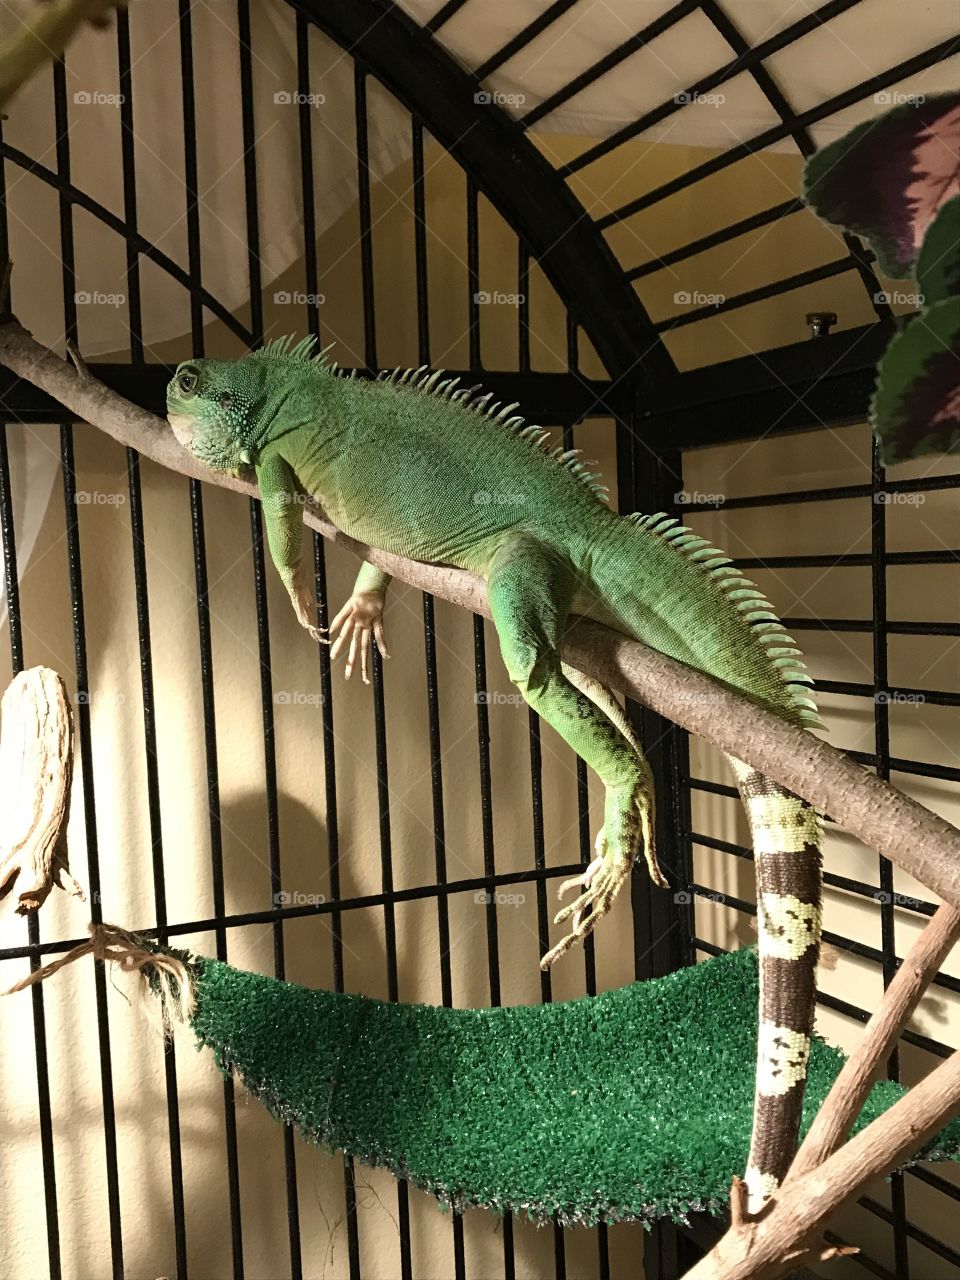 Sleepy lizard